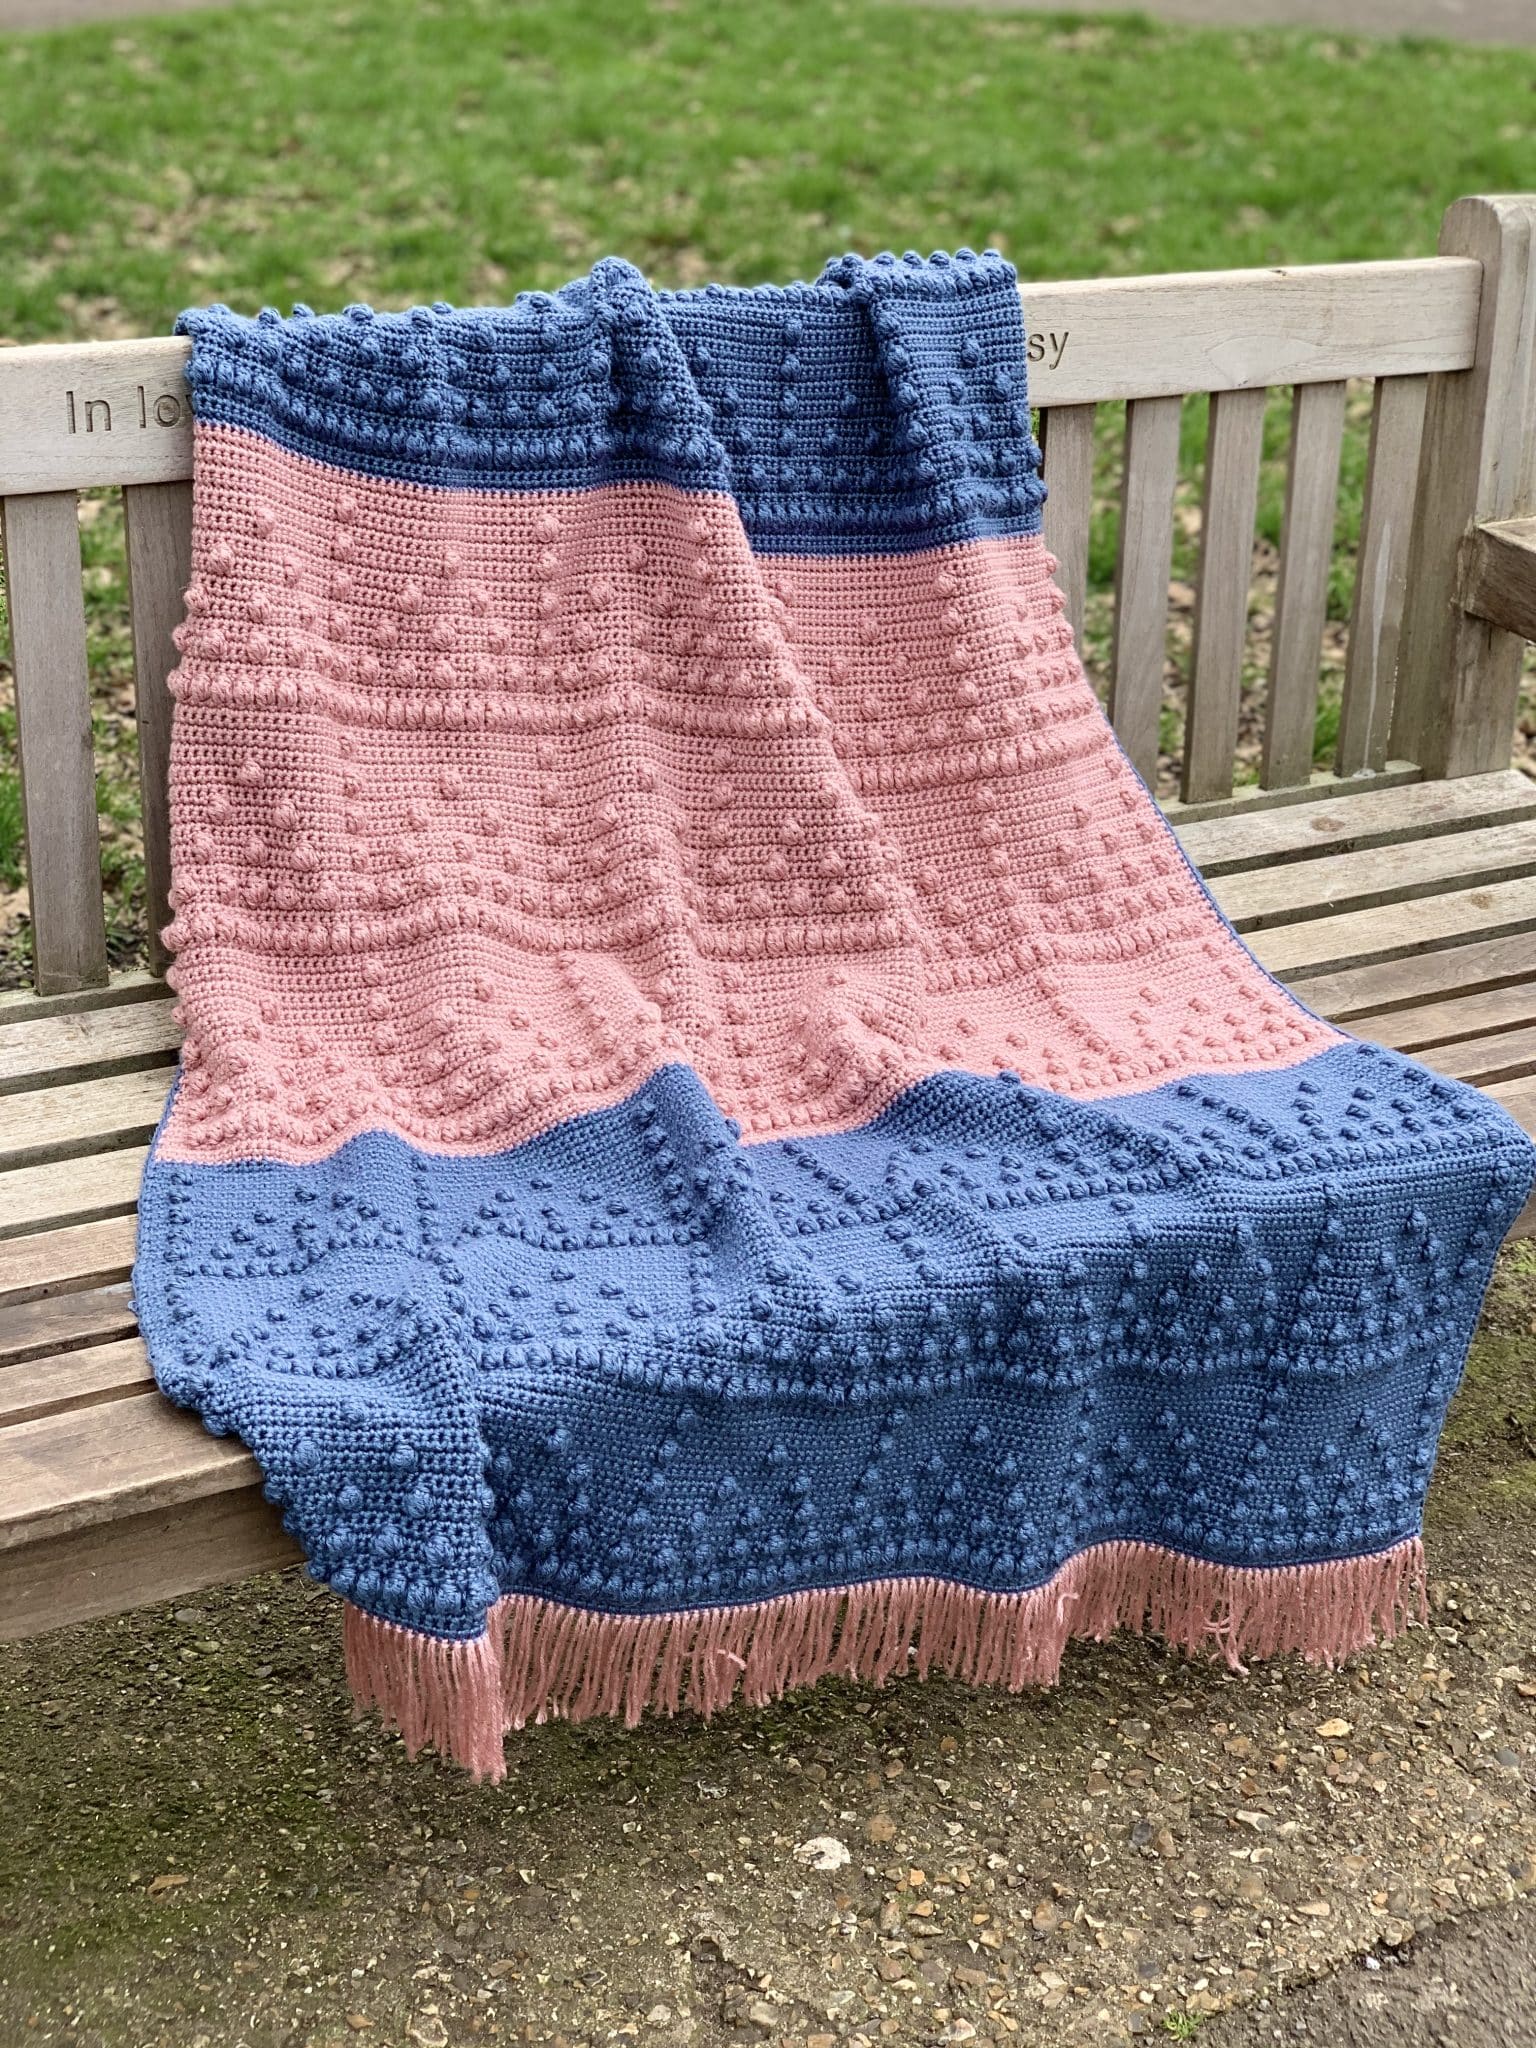 24 Caron Simply Soft Crochet Patterns (2021)